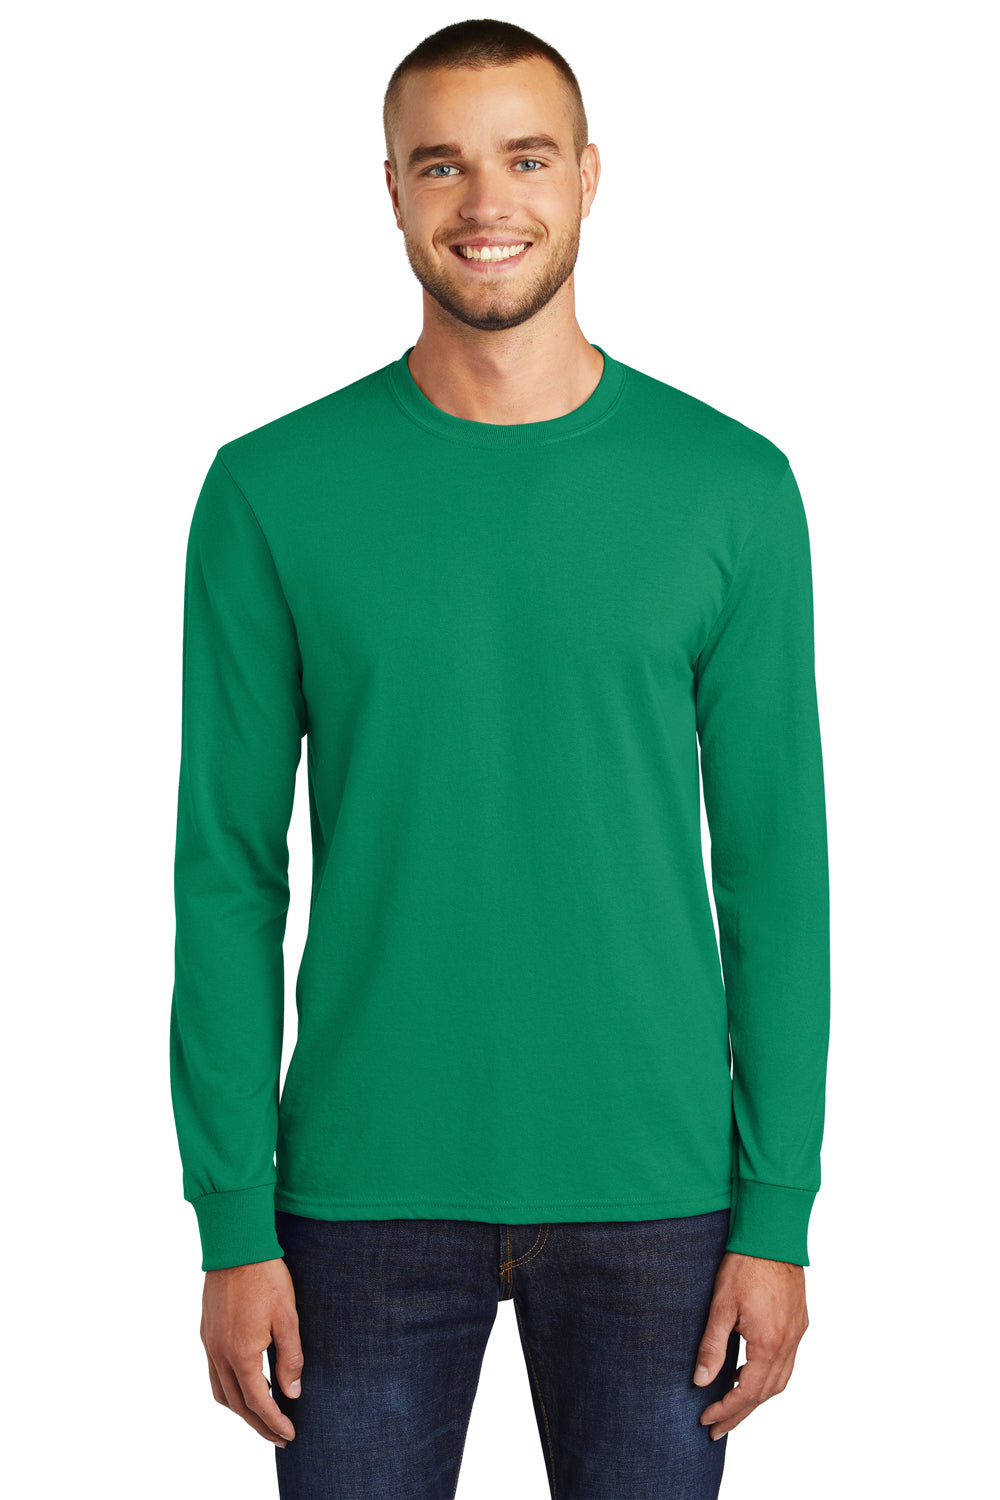 Port & Company PC55LS Mens Core Long Sleeve Crewneck T-Shirt Kelly Green Front